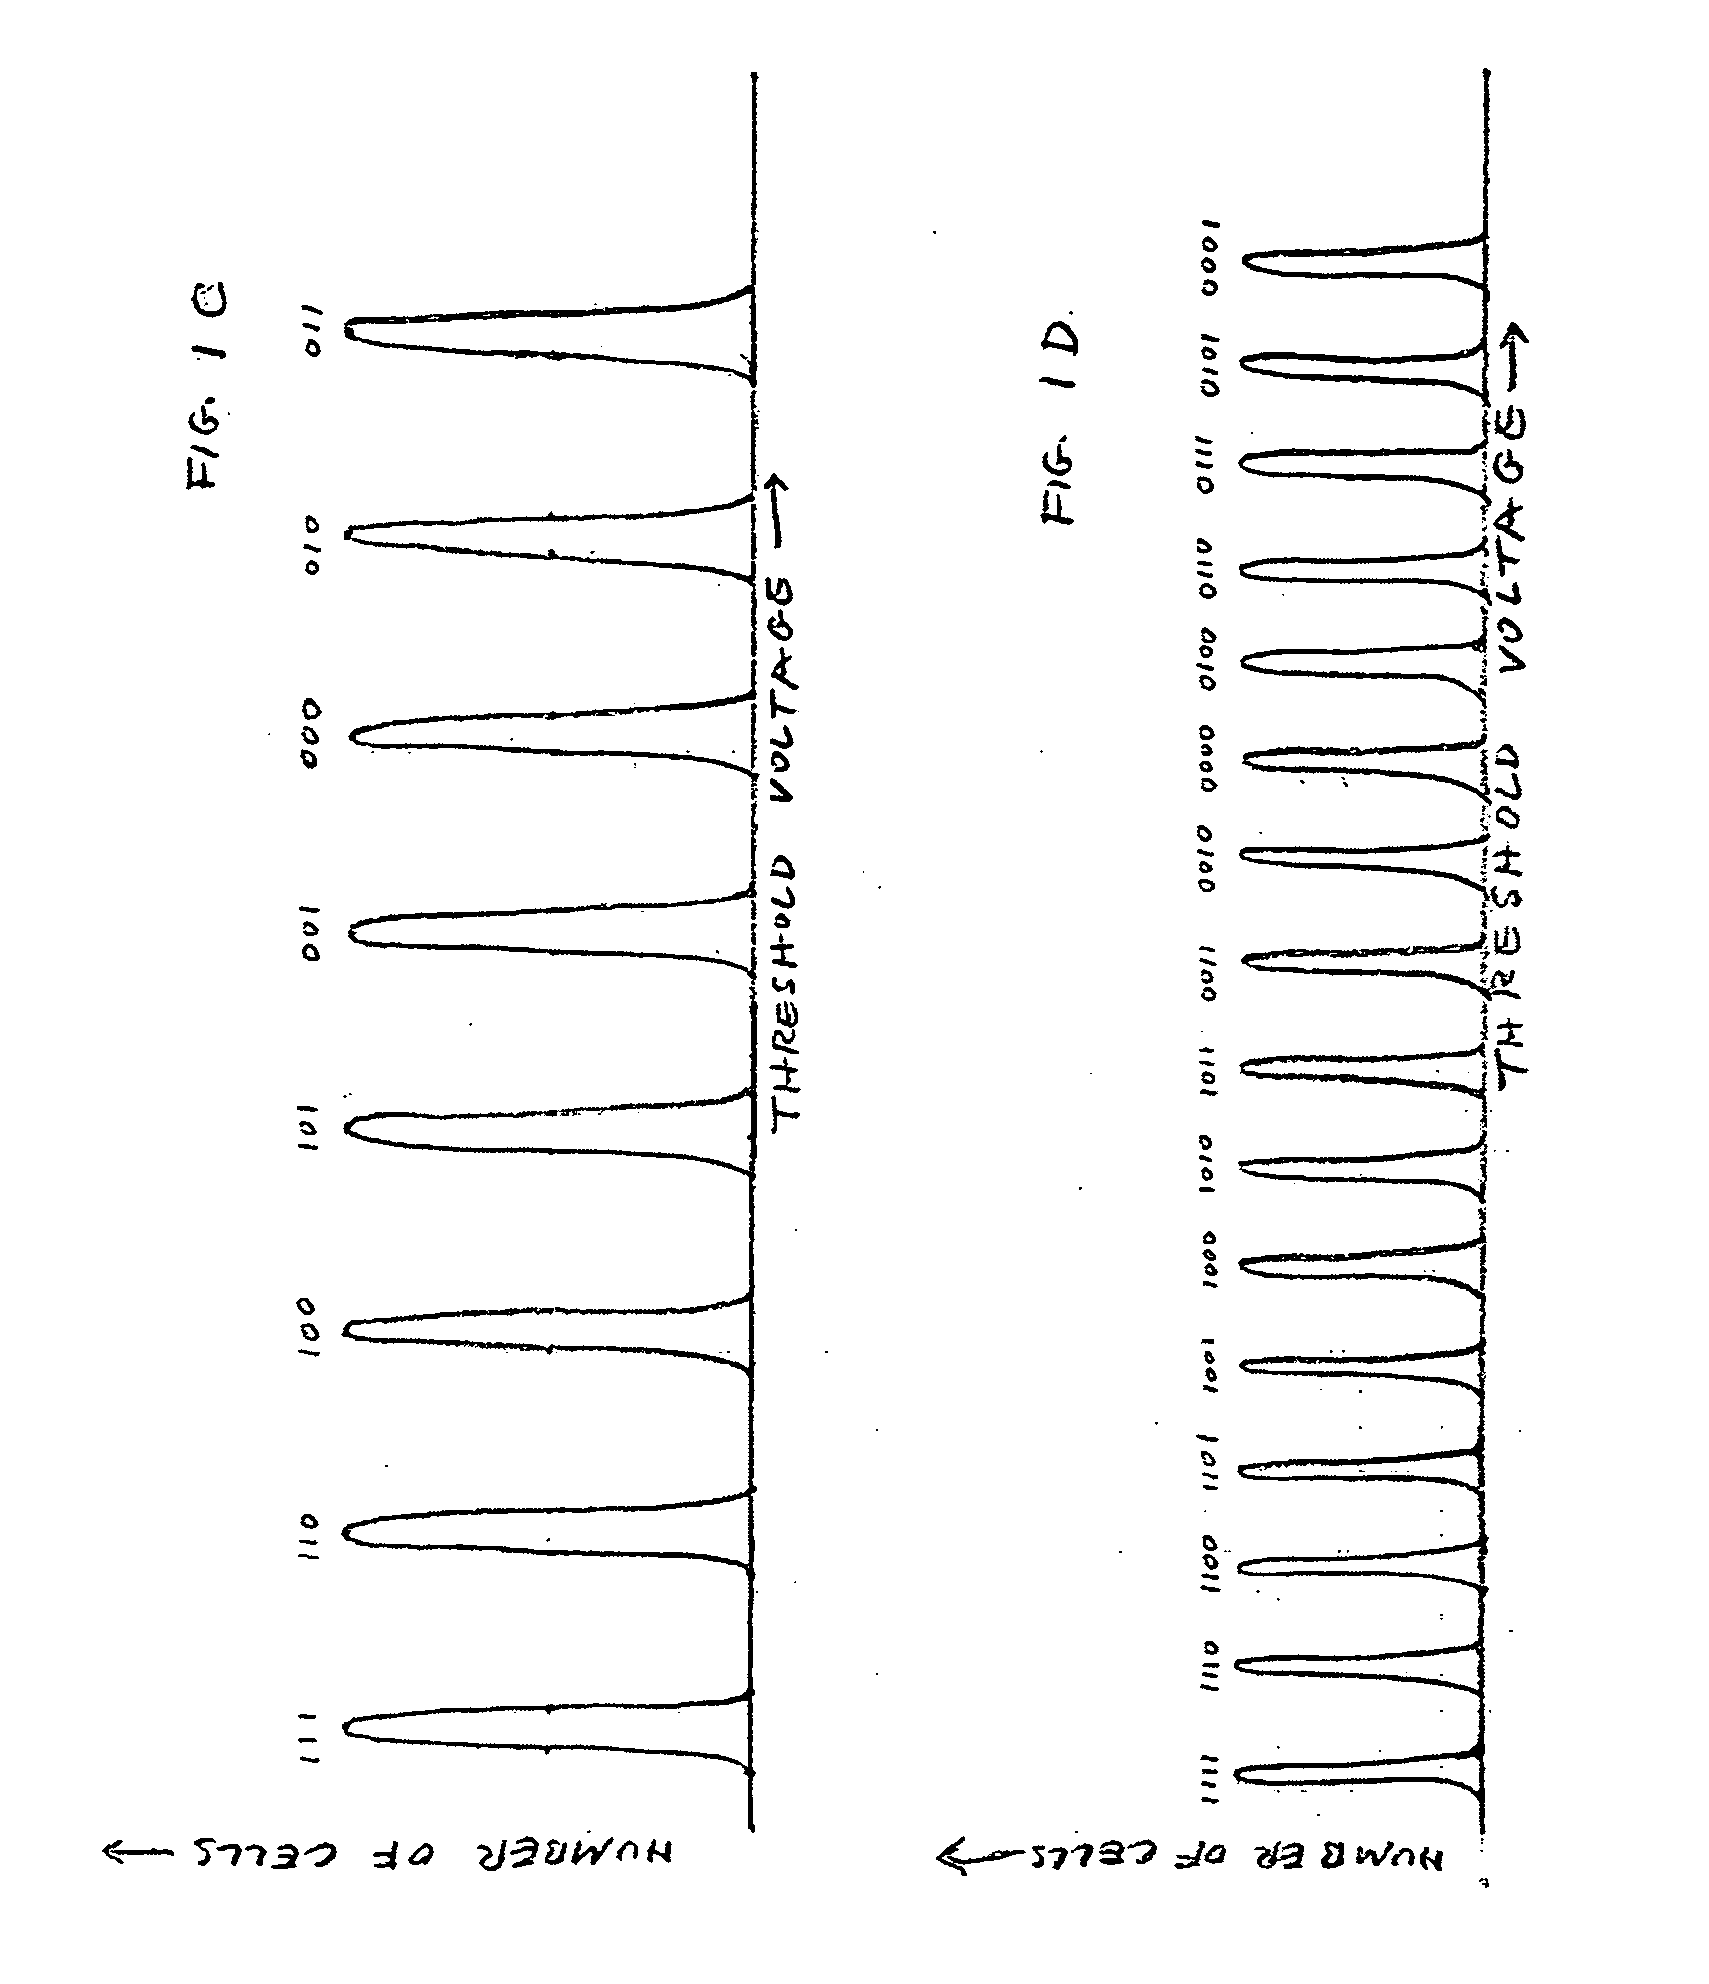 Method of error correction in a multi-bit-per-cell flash memory